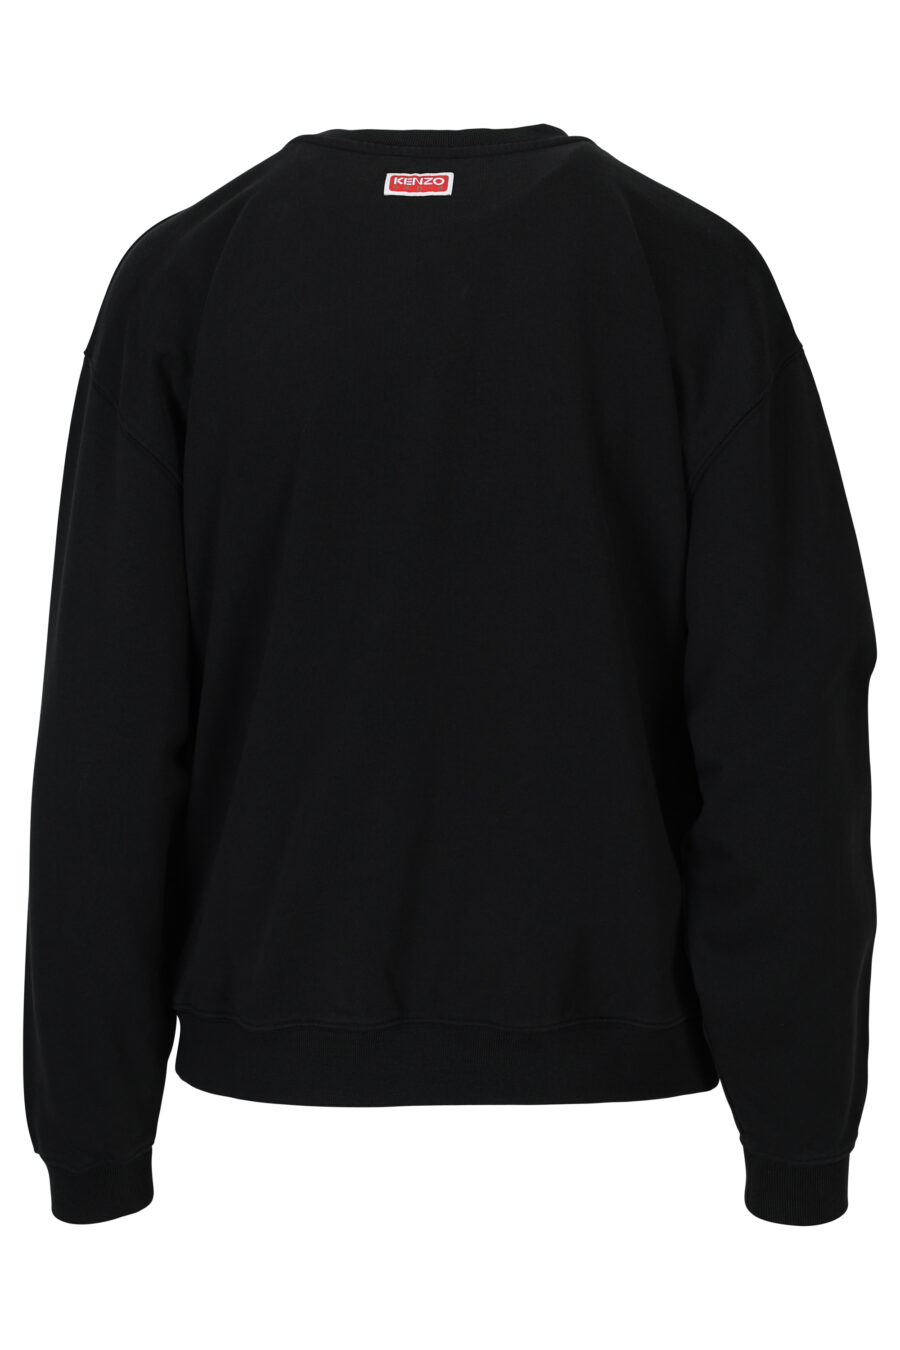 Schwarzes Sweatshirt mit gelbem "kenzo target" Logo - 3612230510432 1